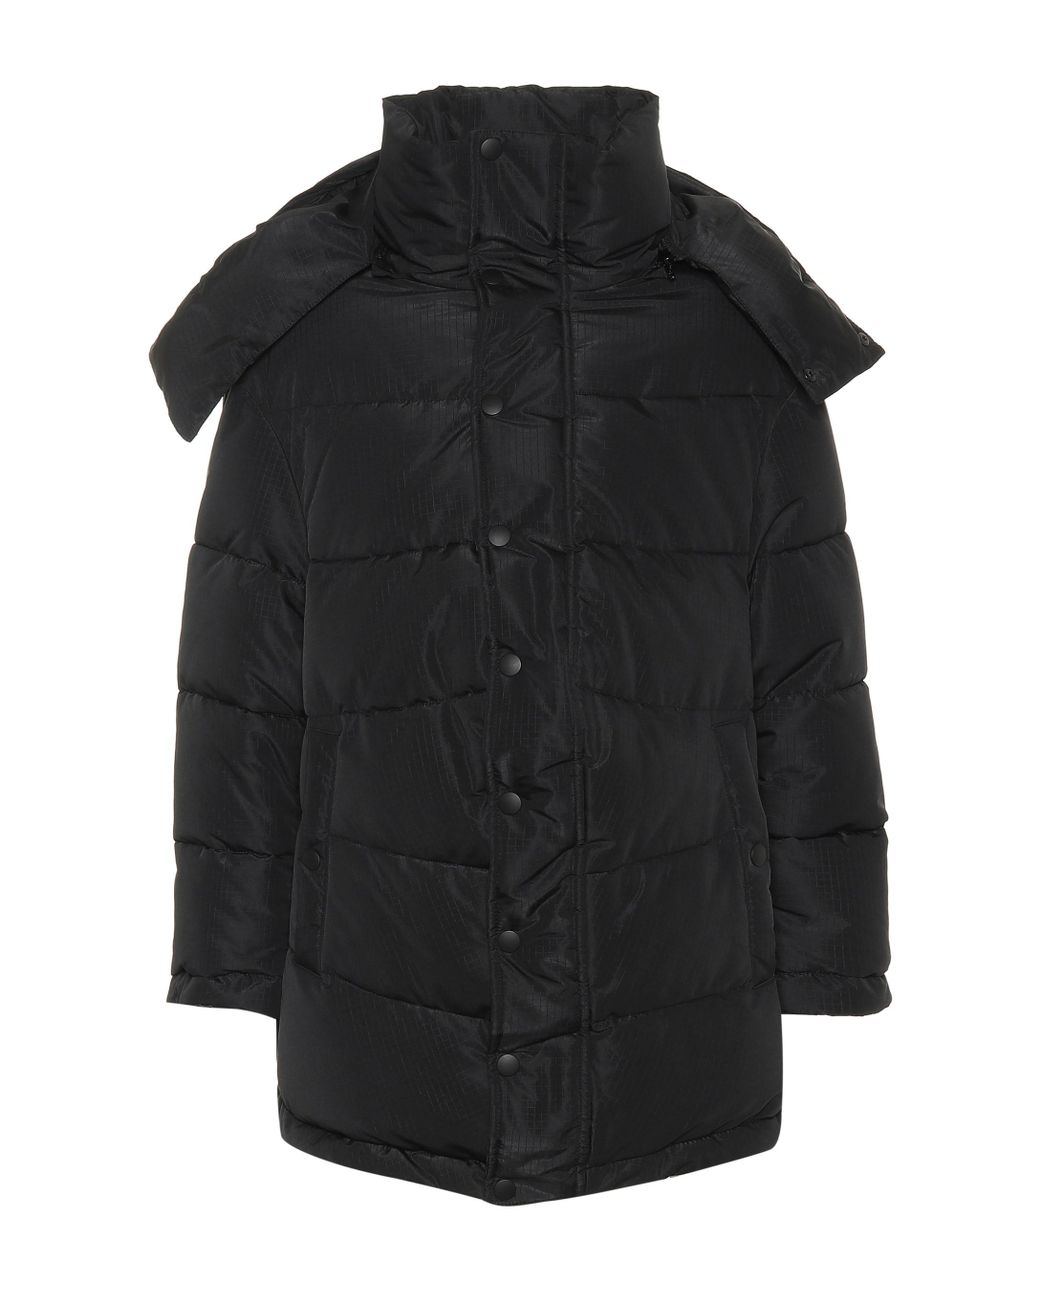 Balenciaga New Swing Puffer Jacket in Black - Lyst